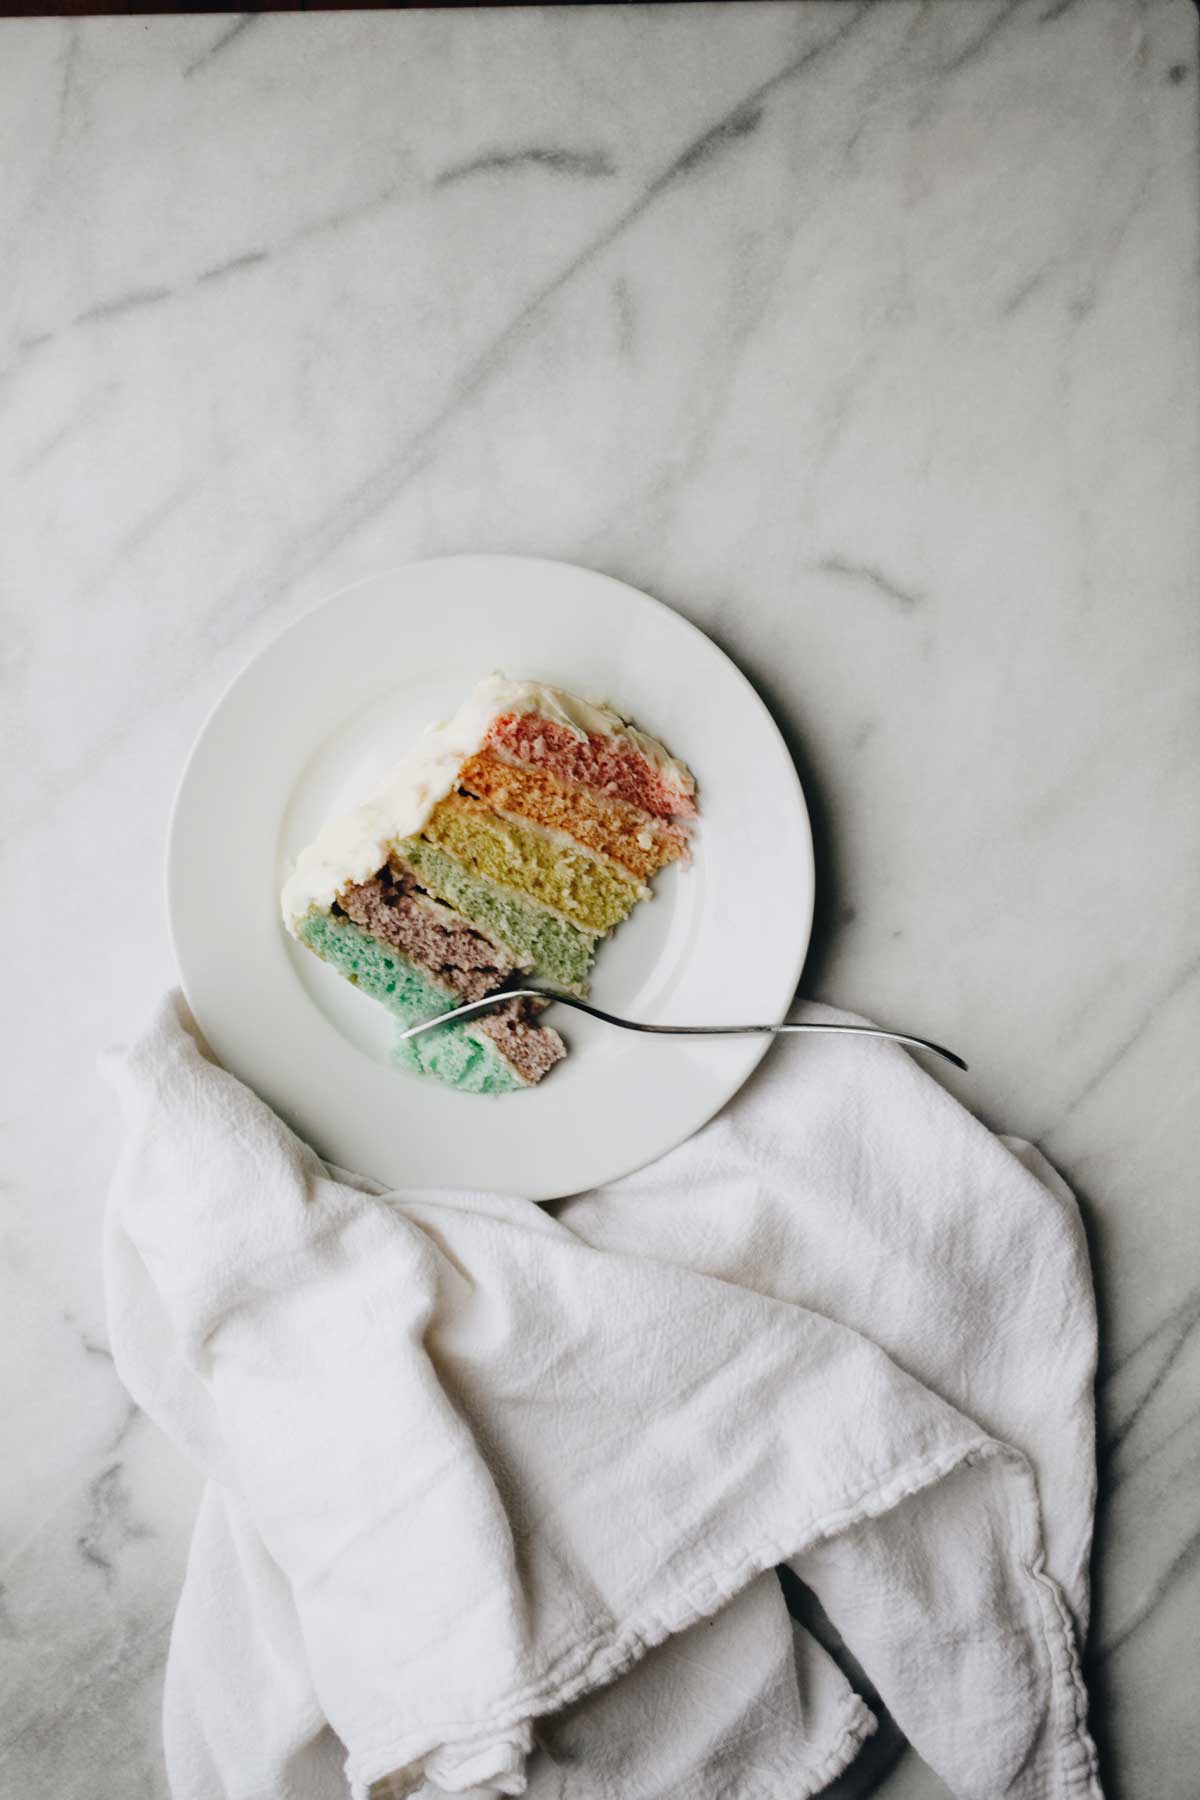 RAINBOW CAKE